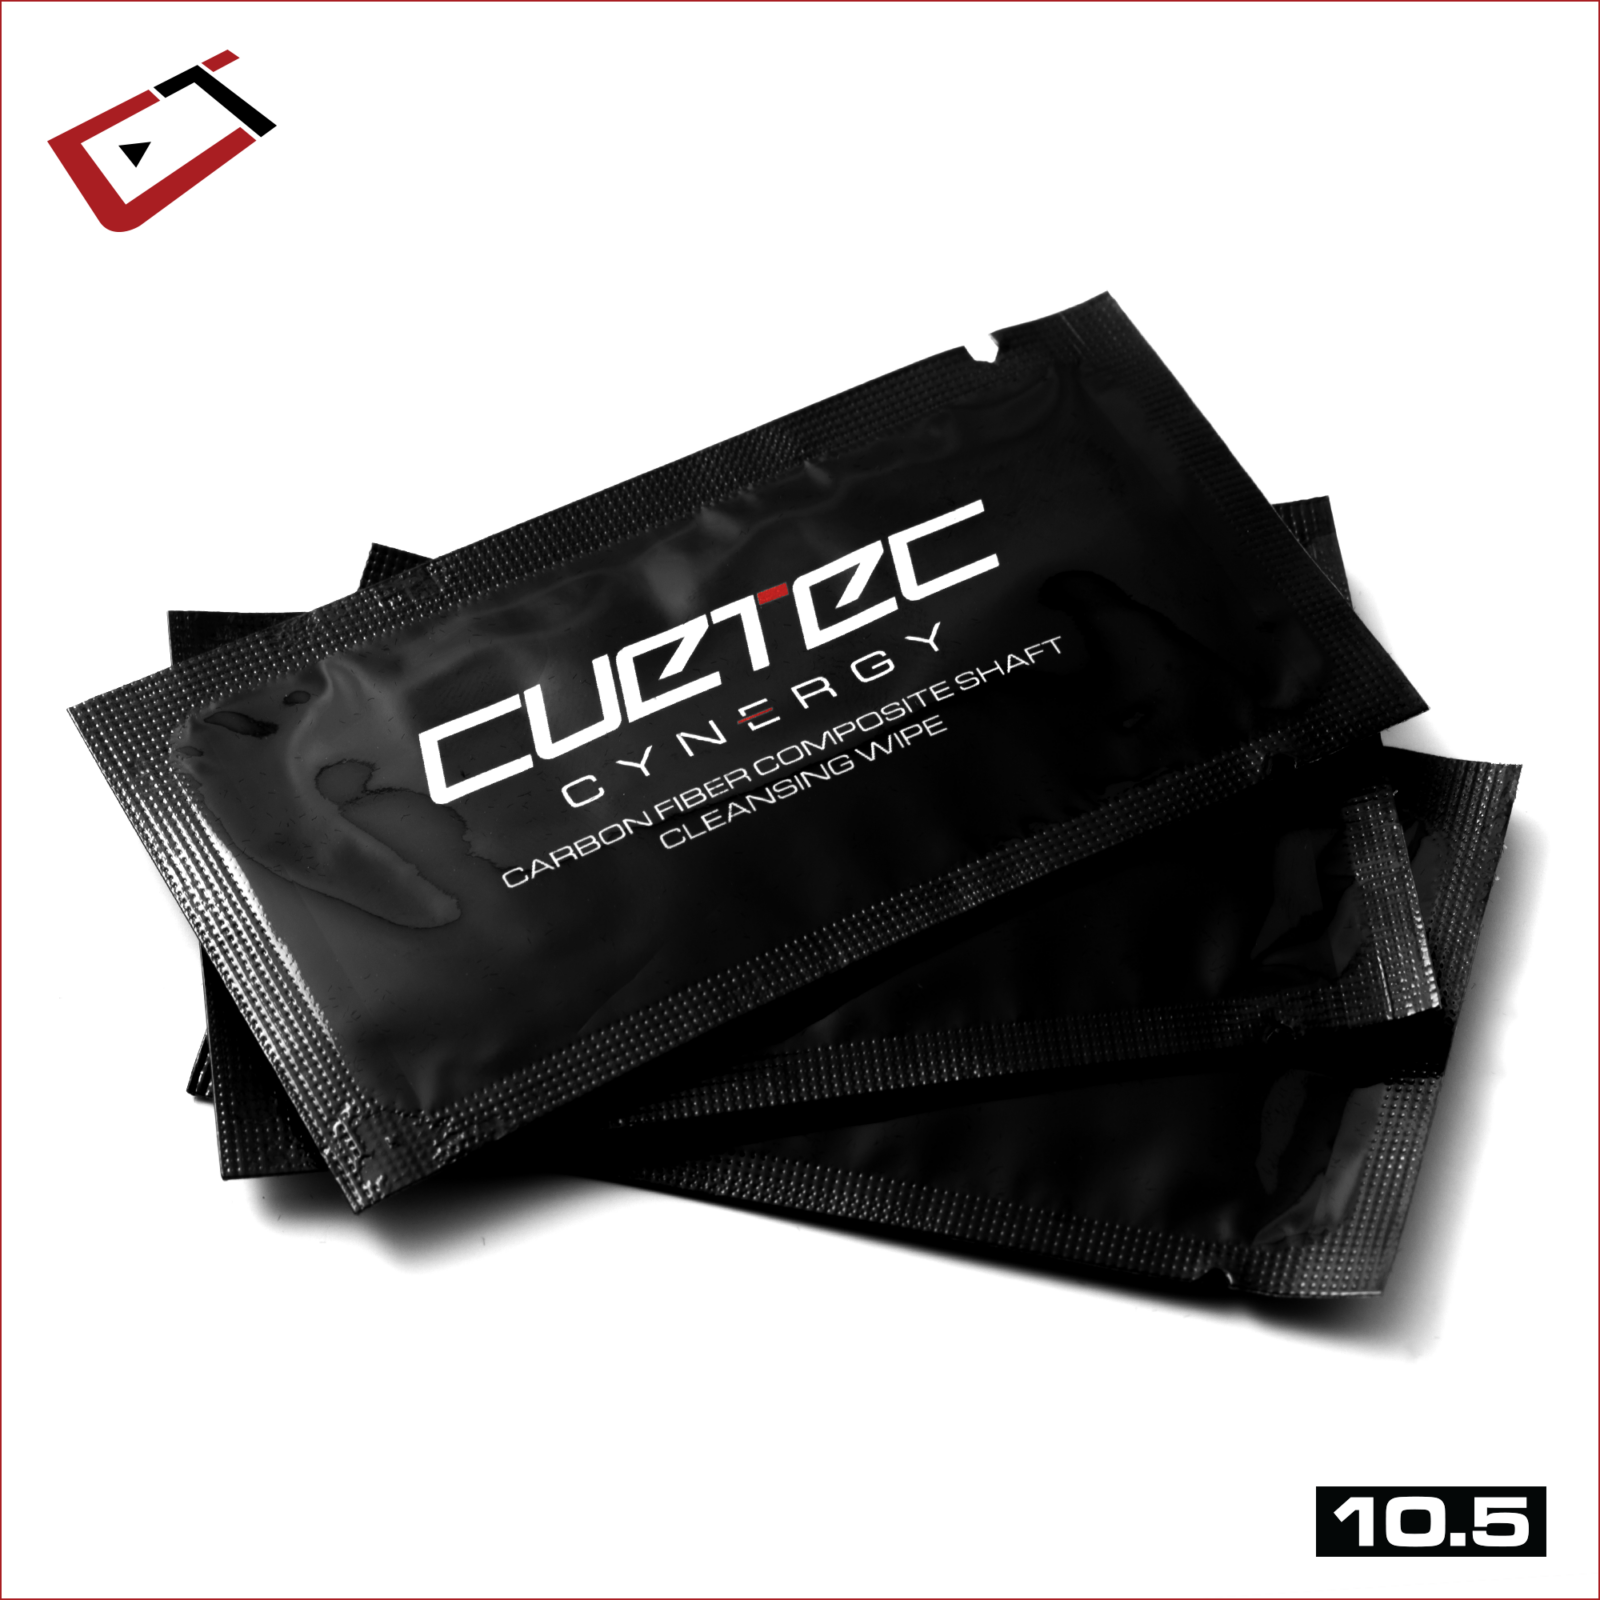 Cuetec Cynergy Shaft 10.5mm 5/16x14 95-024T Wipes